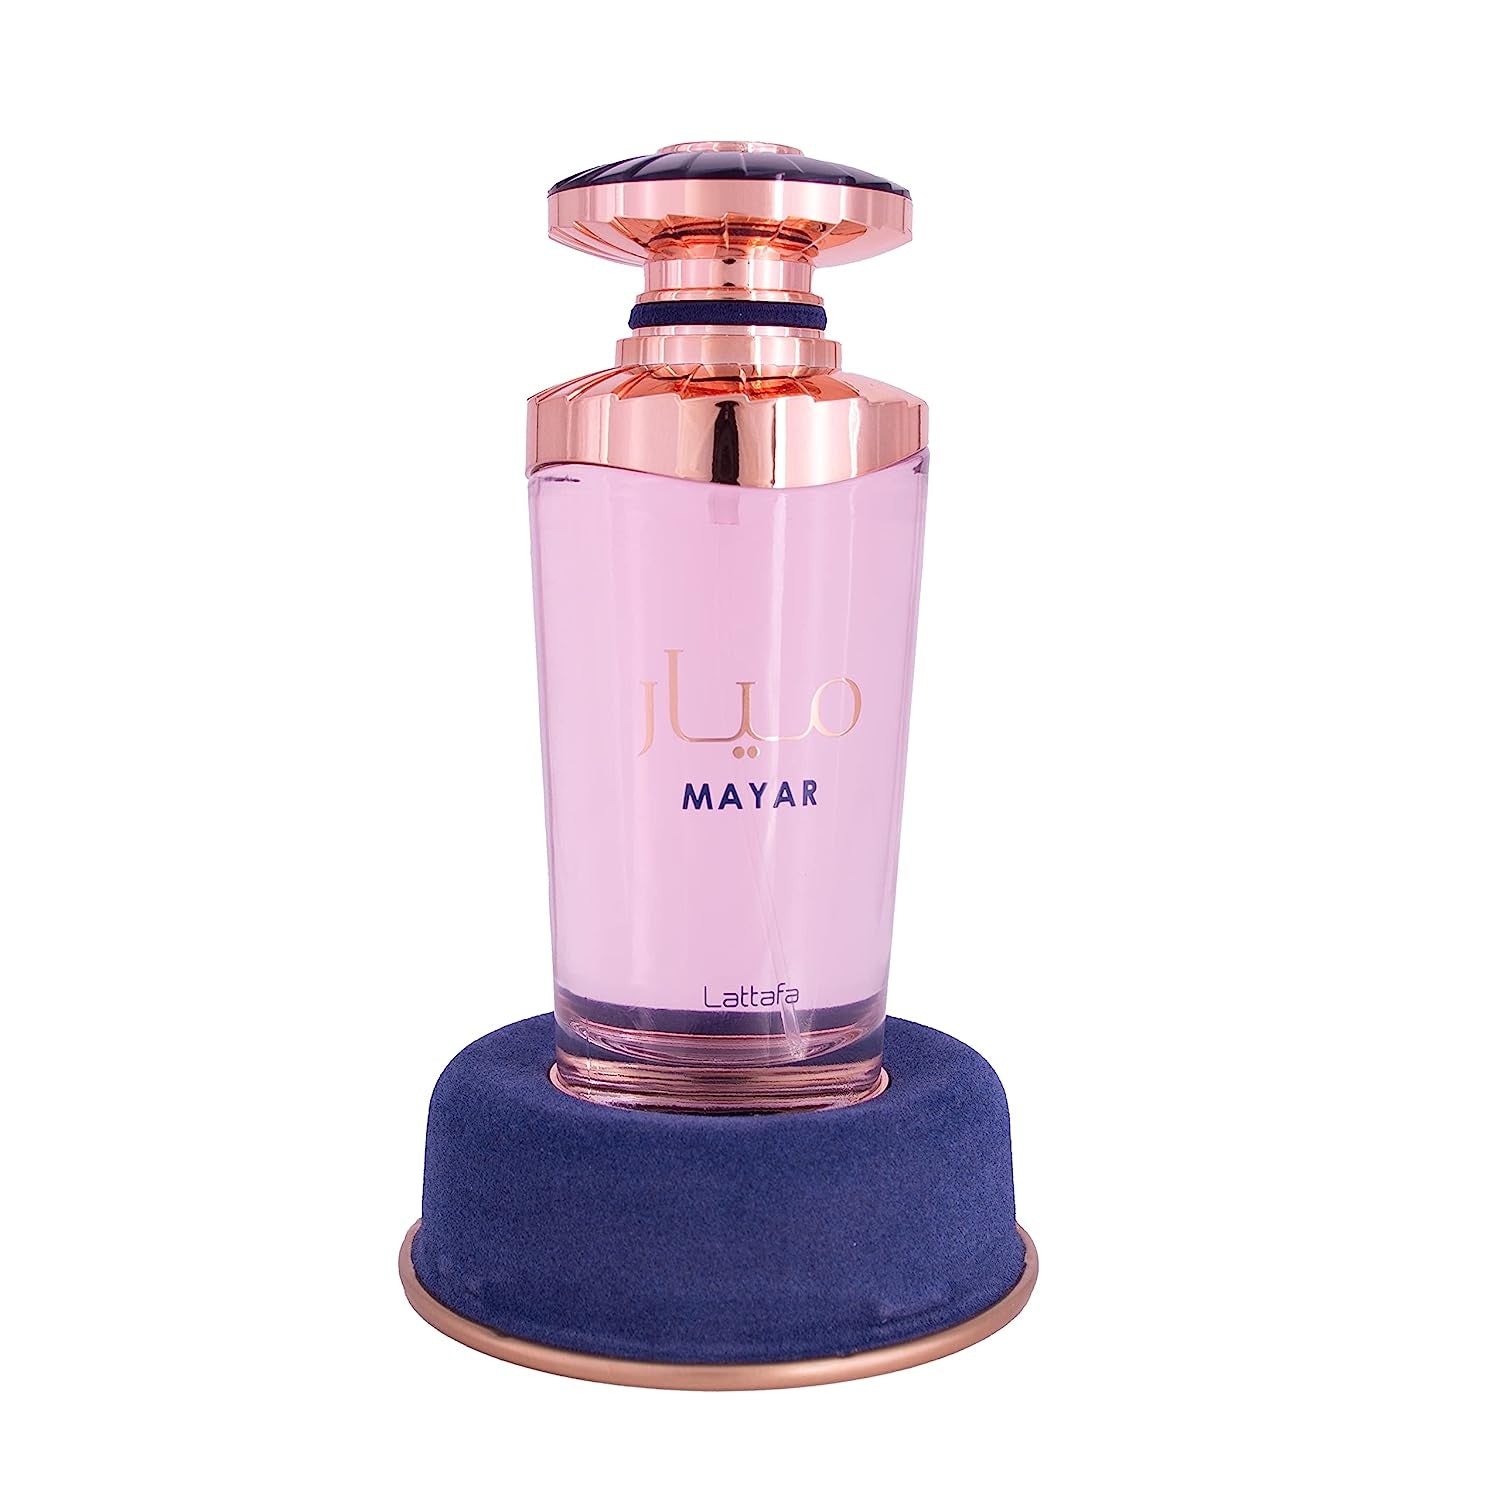 Mayar EDP - Eau De Parfum Women 100Ml(3.4 Oz) | Lychee, White Flowers, Vanilla, Musk